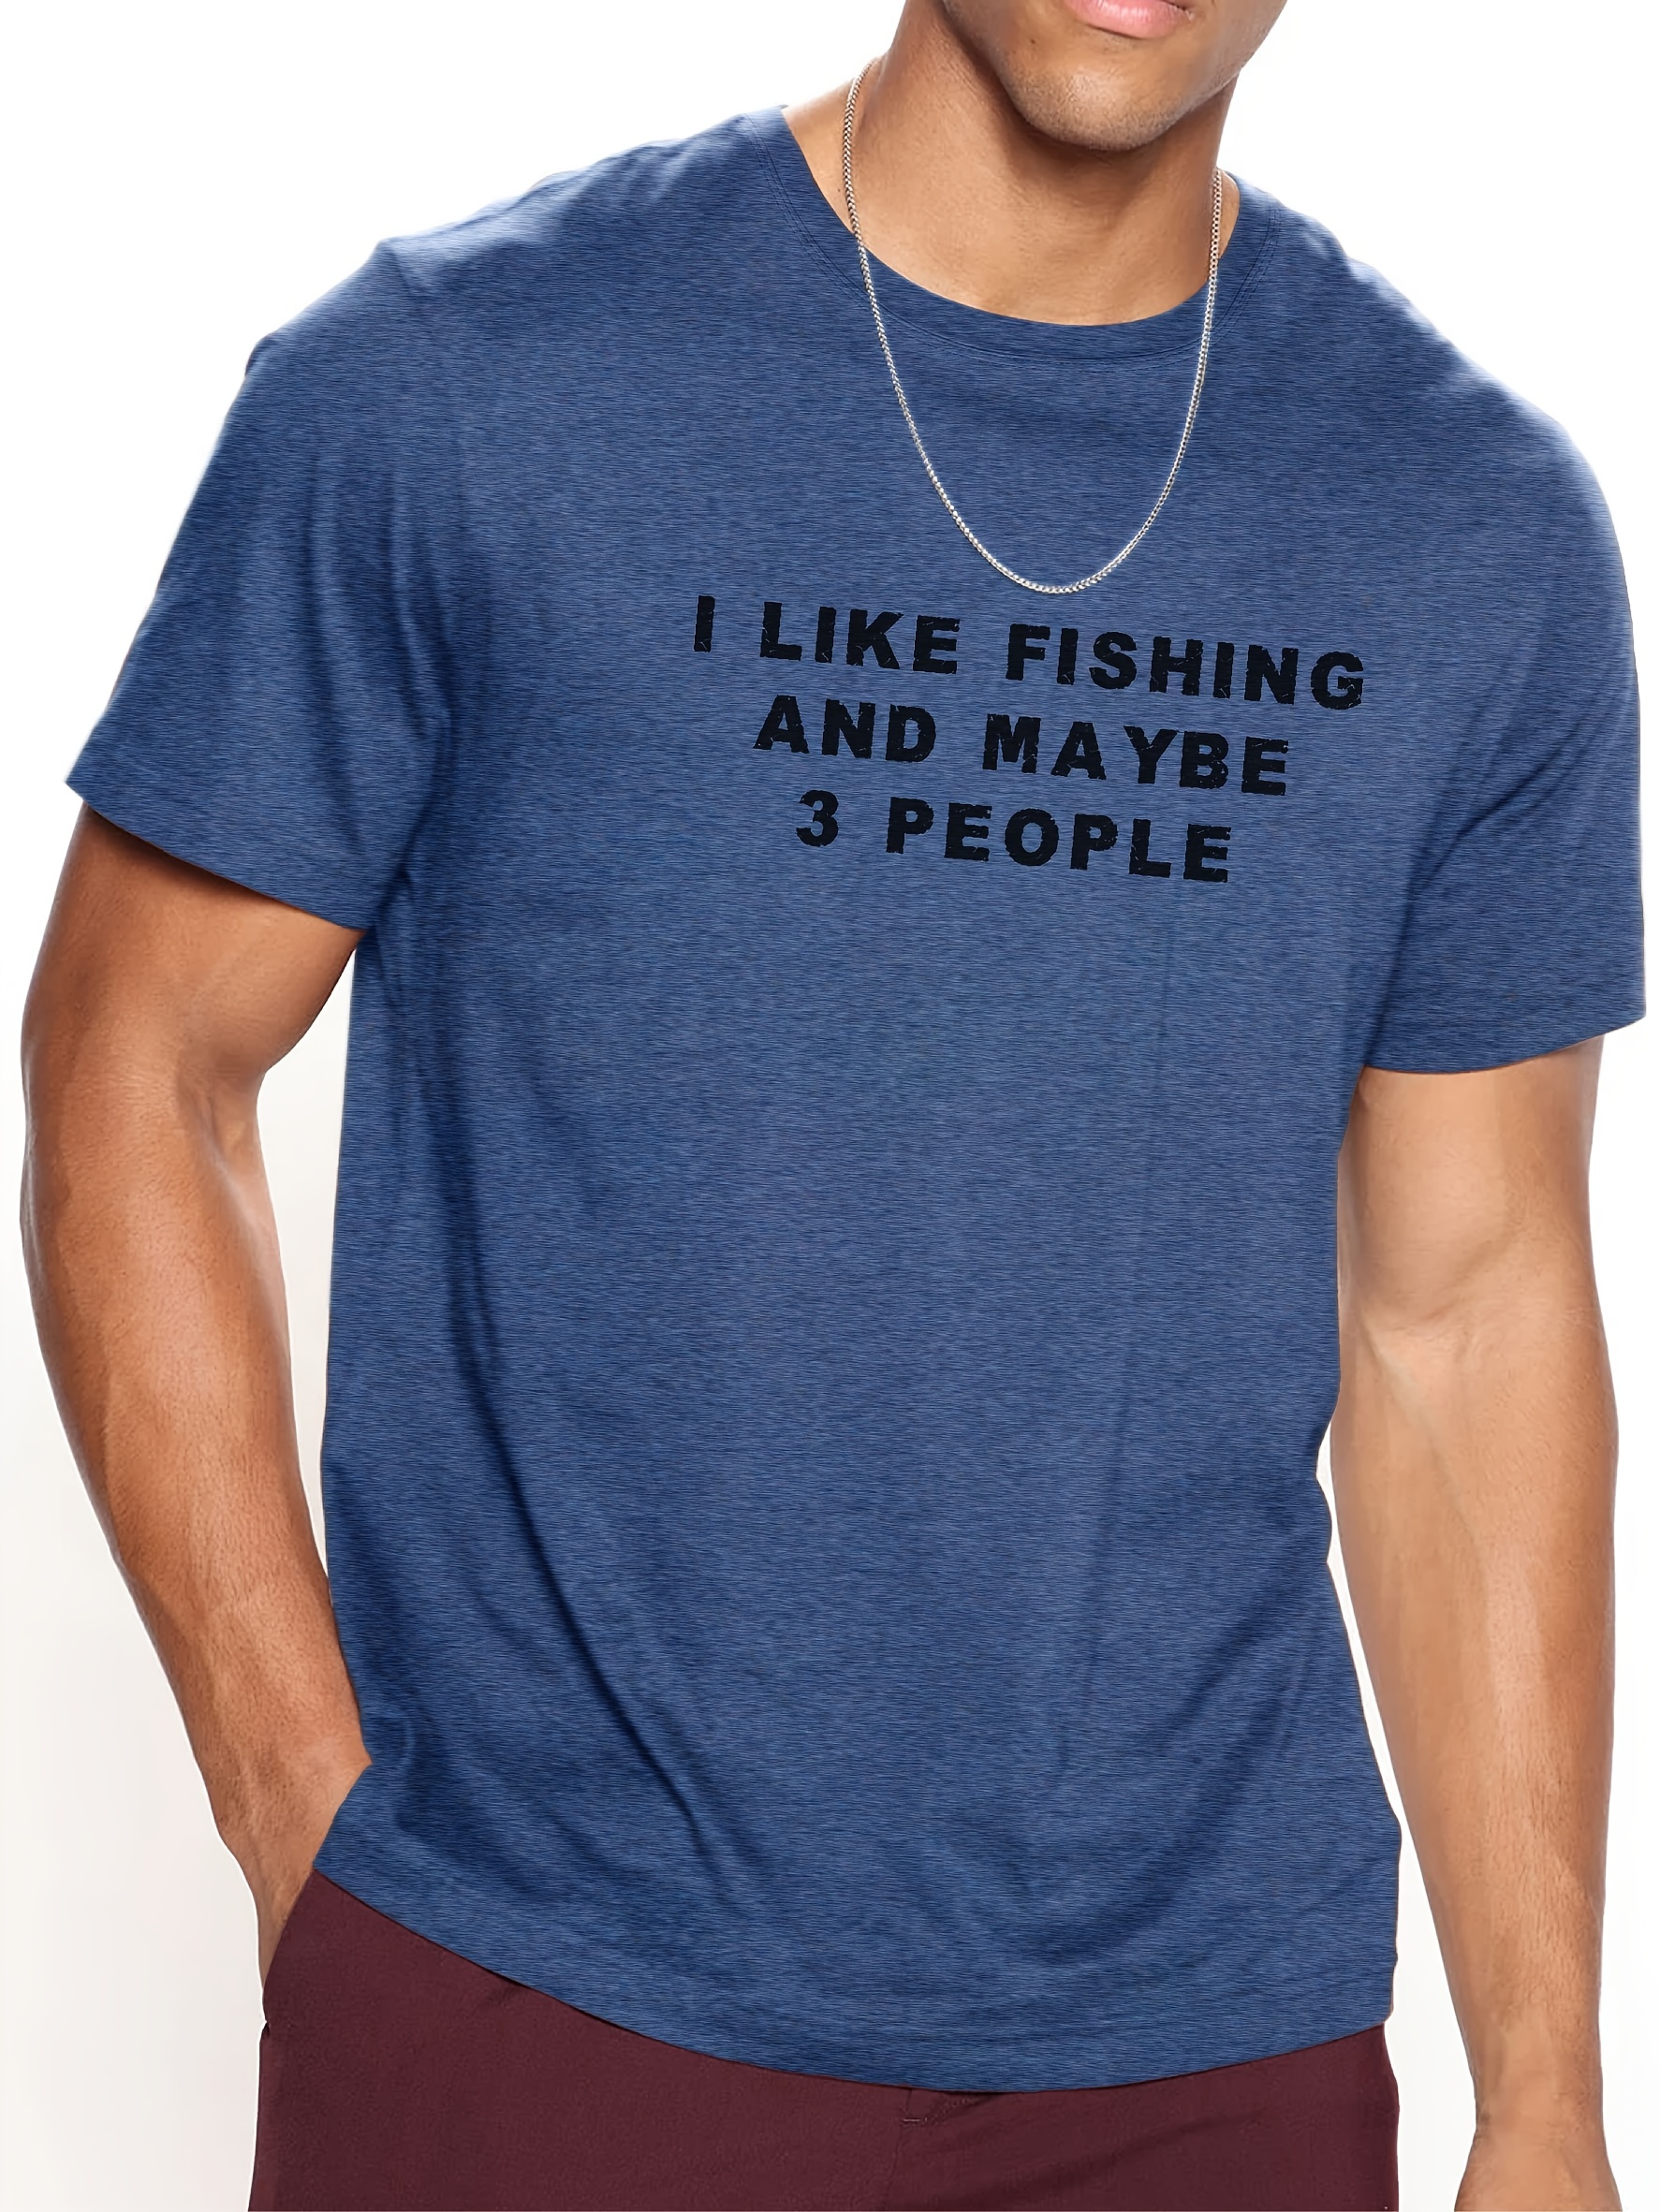 I Love Fishing But I Don t Like Crabbing cool fun' Men's V-Neck T-Shirt